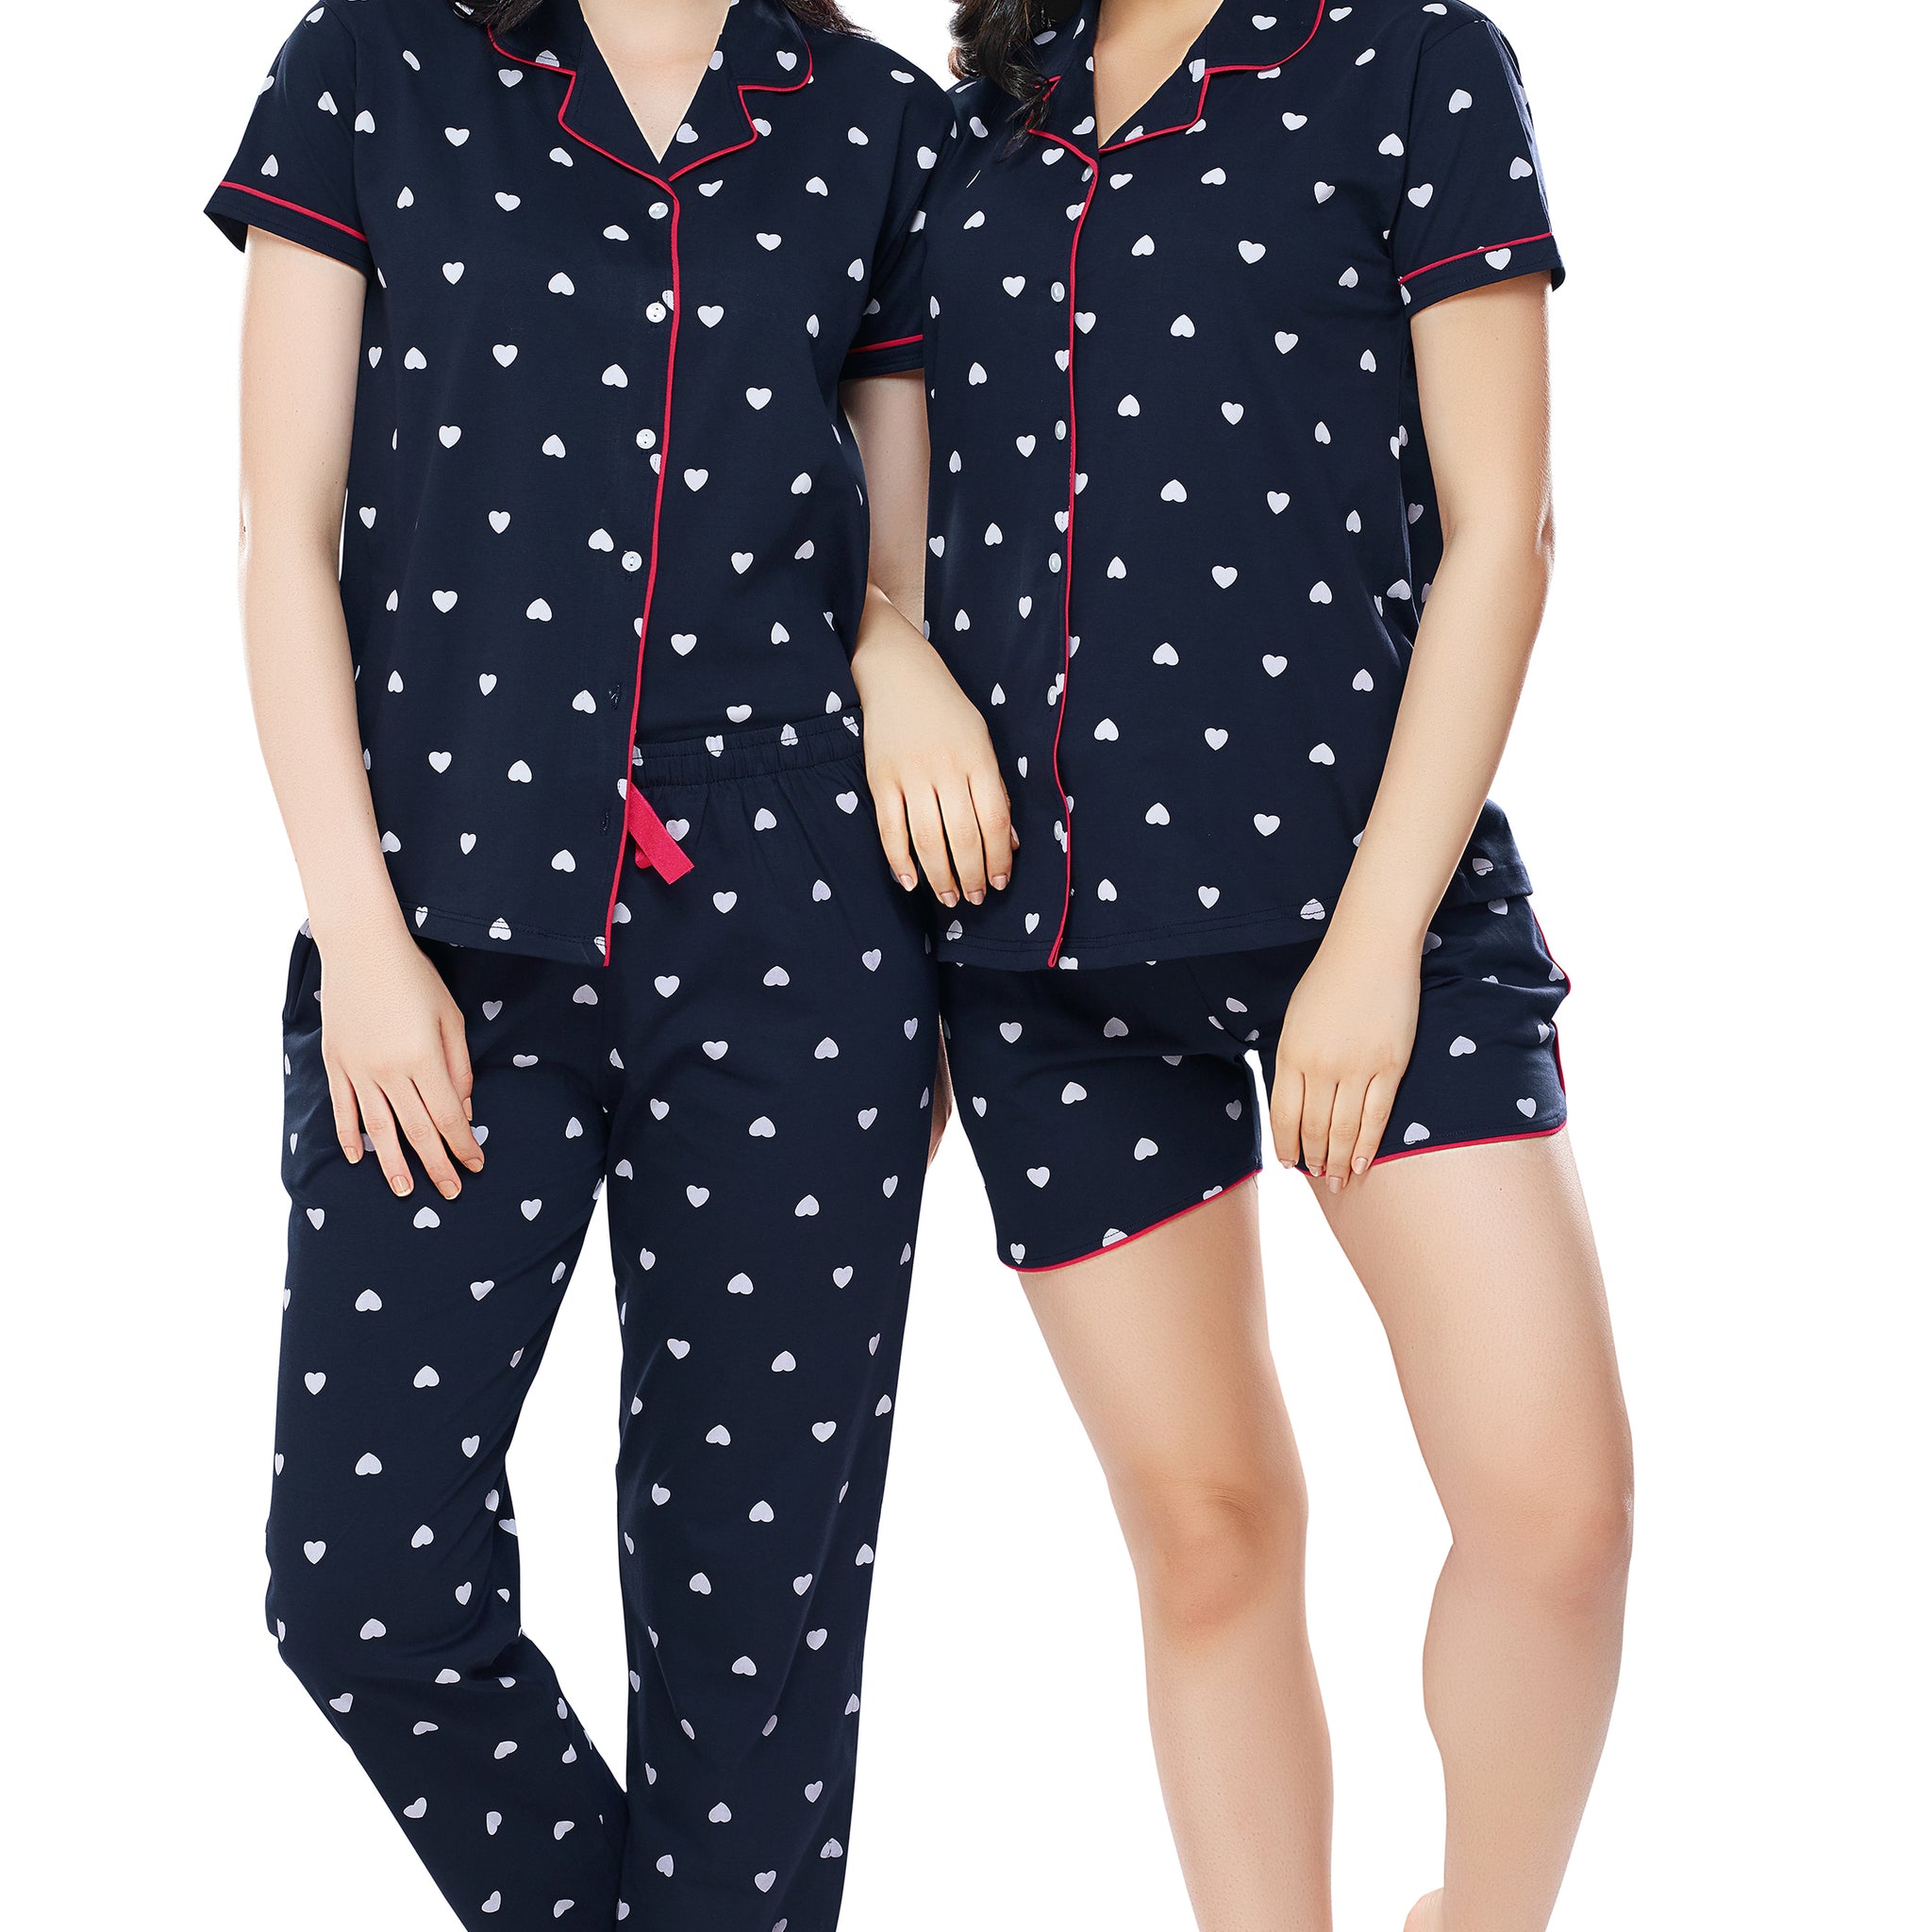 ZEYO Women's Cotton 3PCS Navy Blue Heart Printed Night suit set